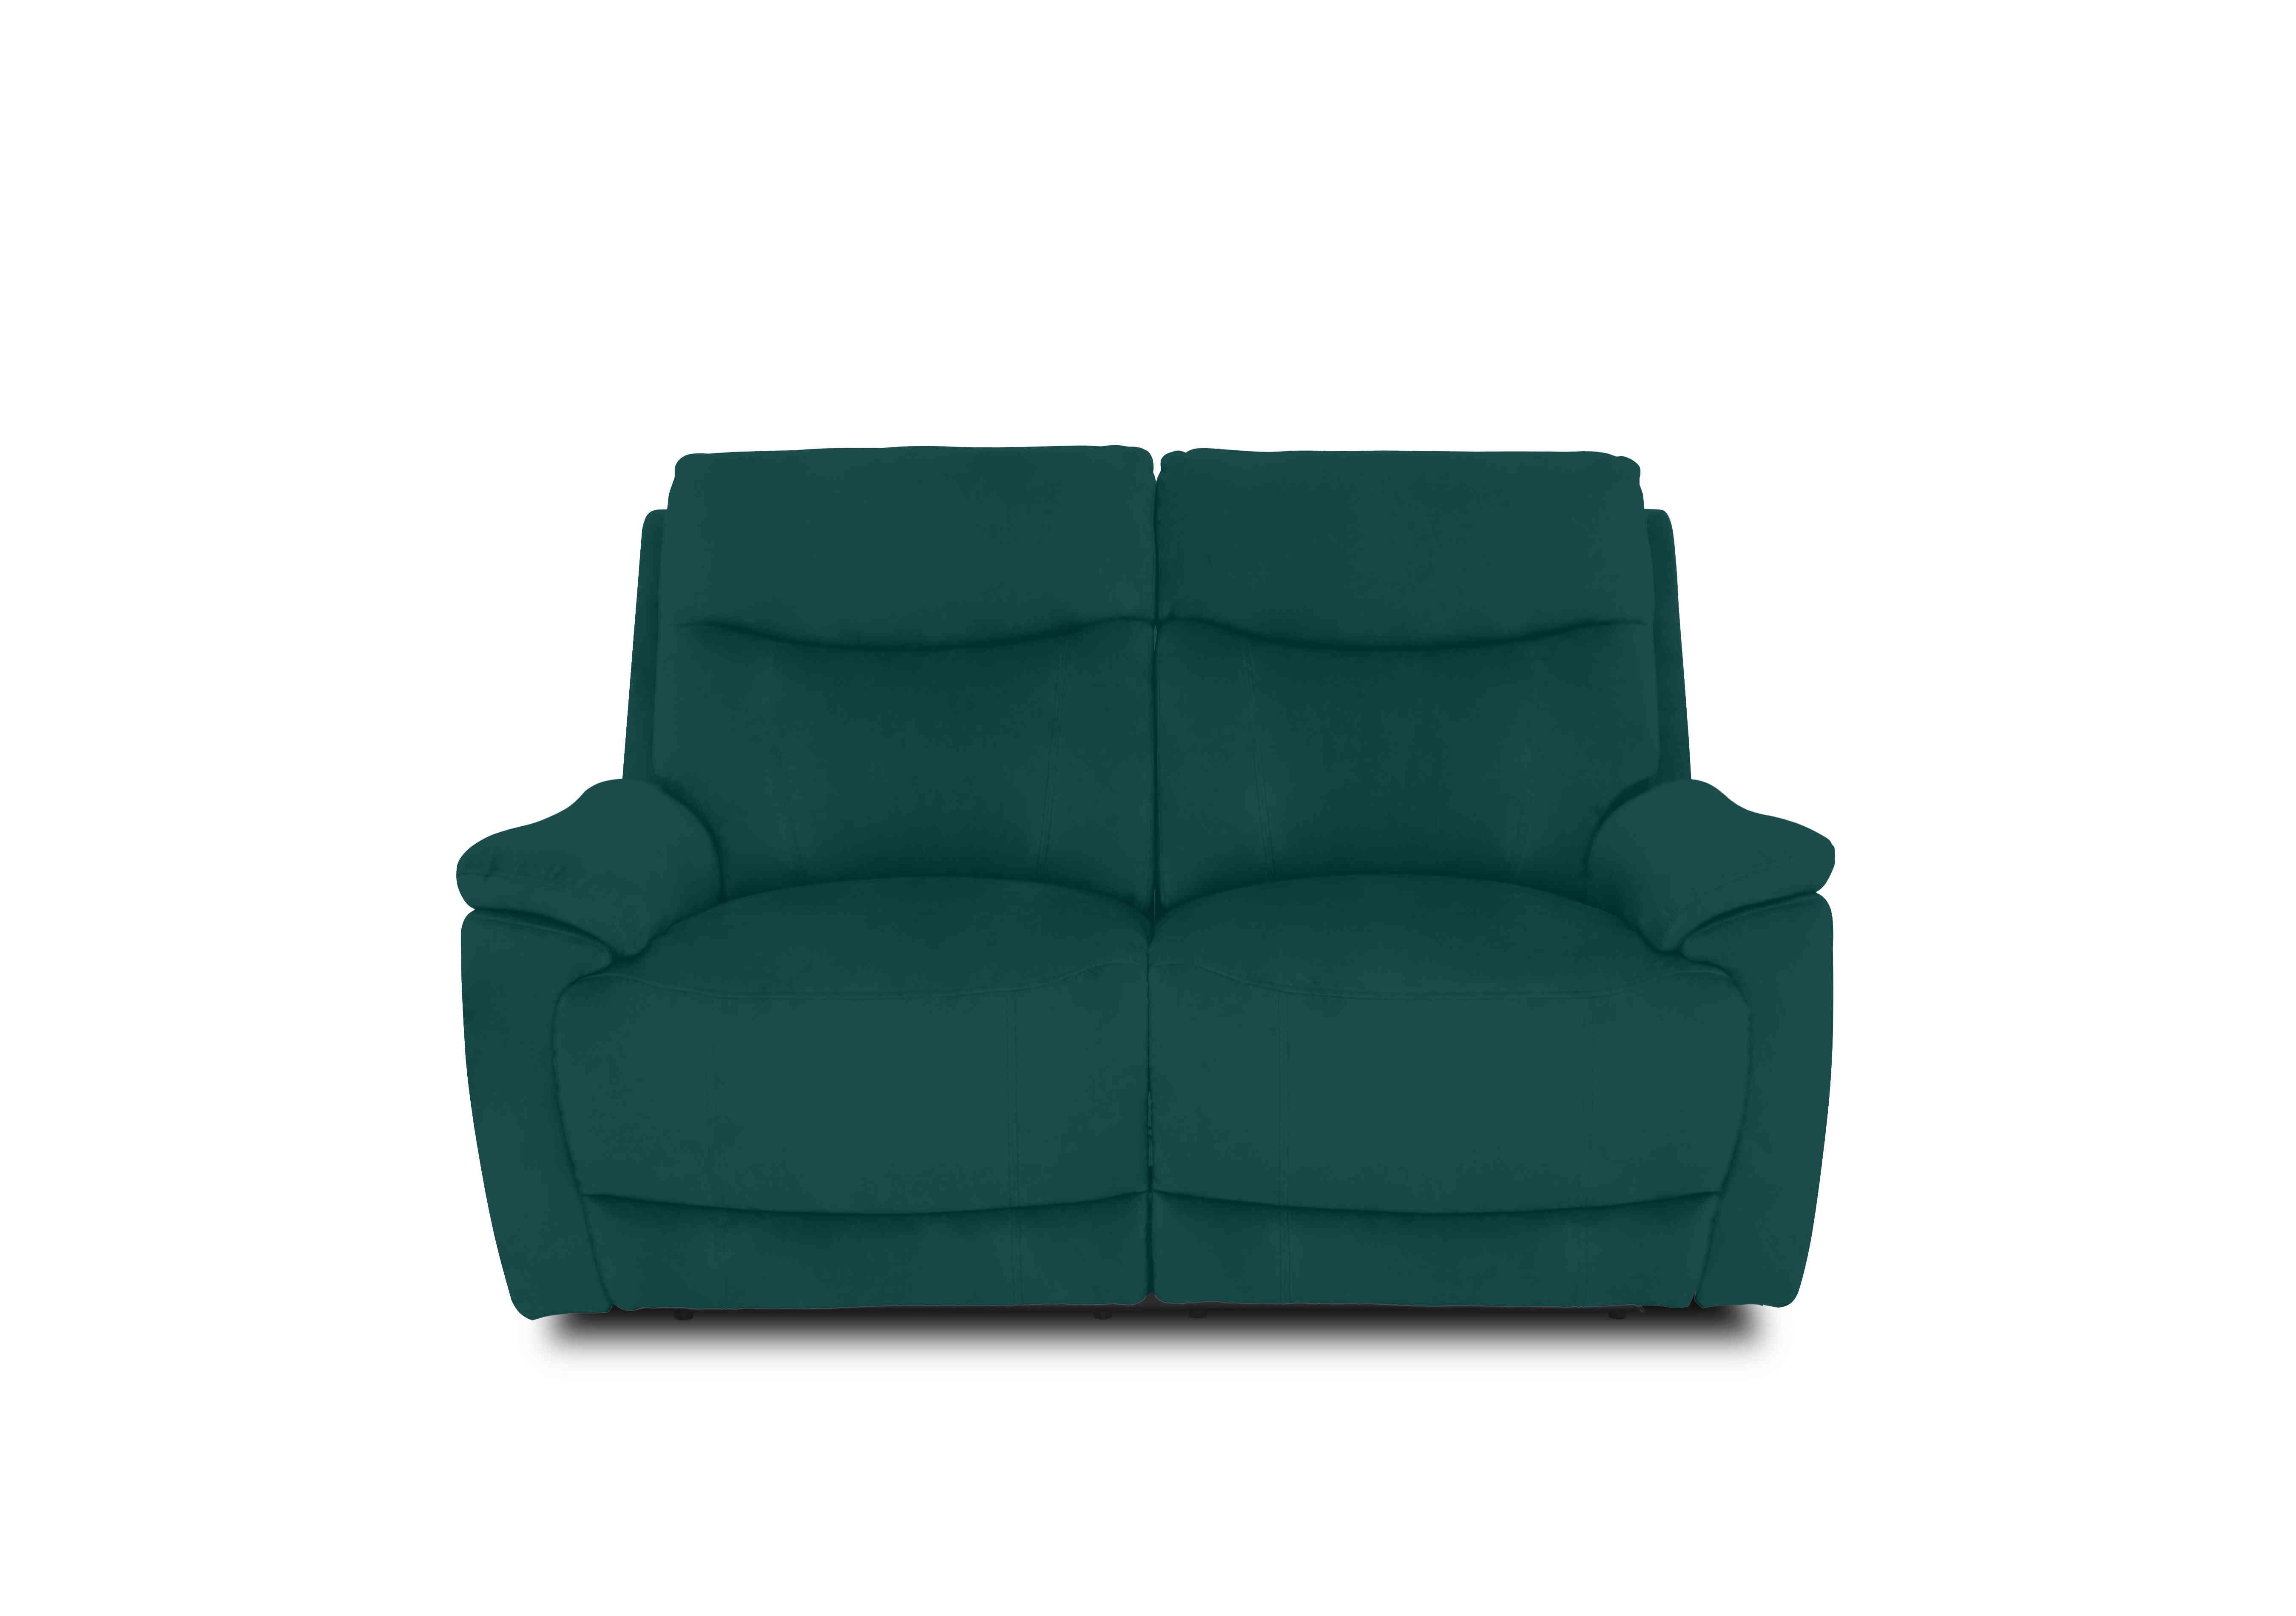 Sloane 2 Seater Fabric Sofa in 51003 Opulence Teal on Furniture Village